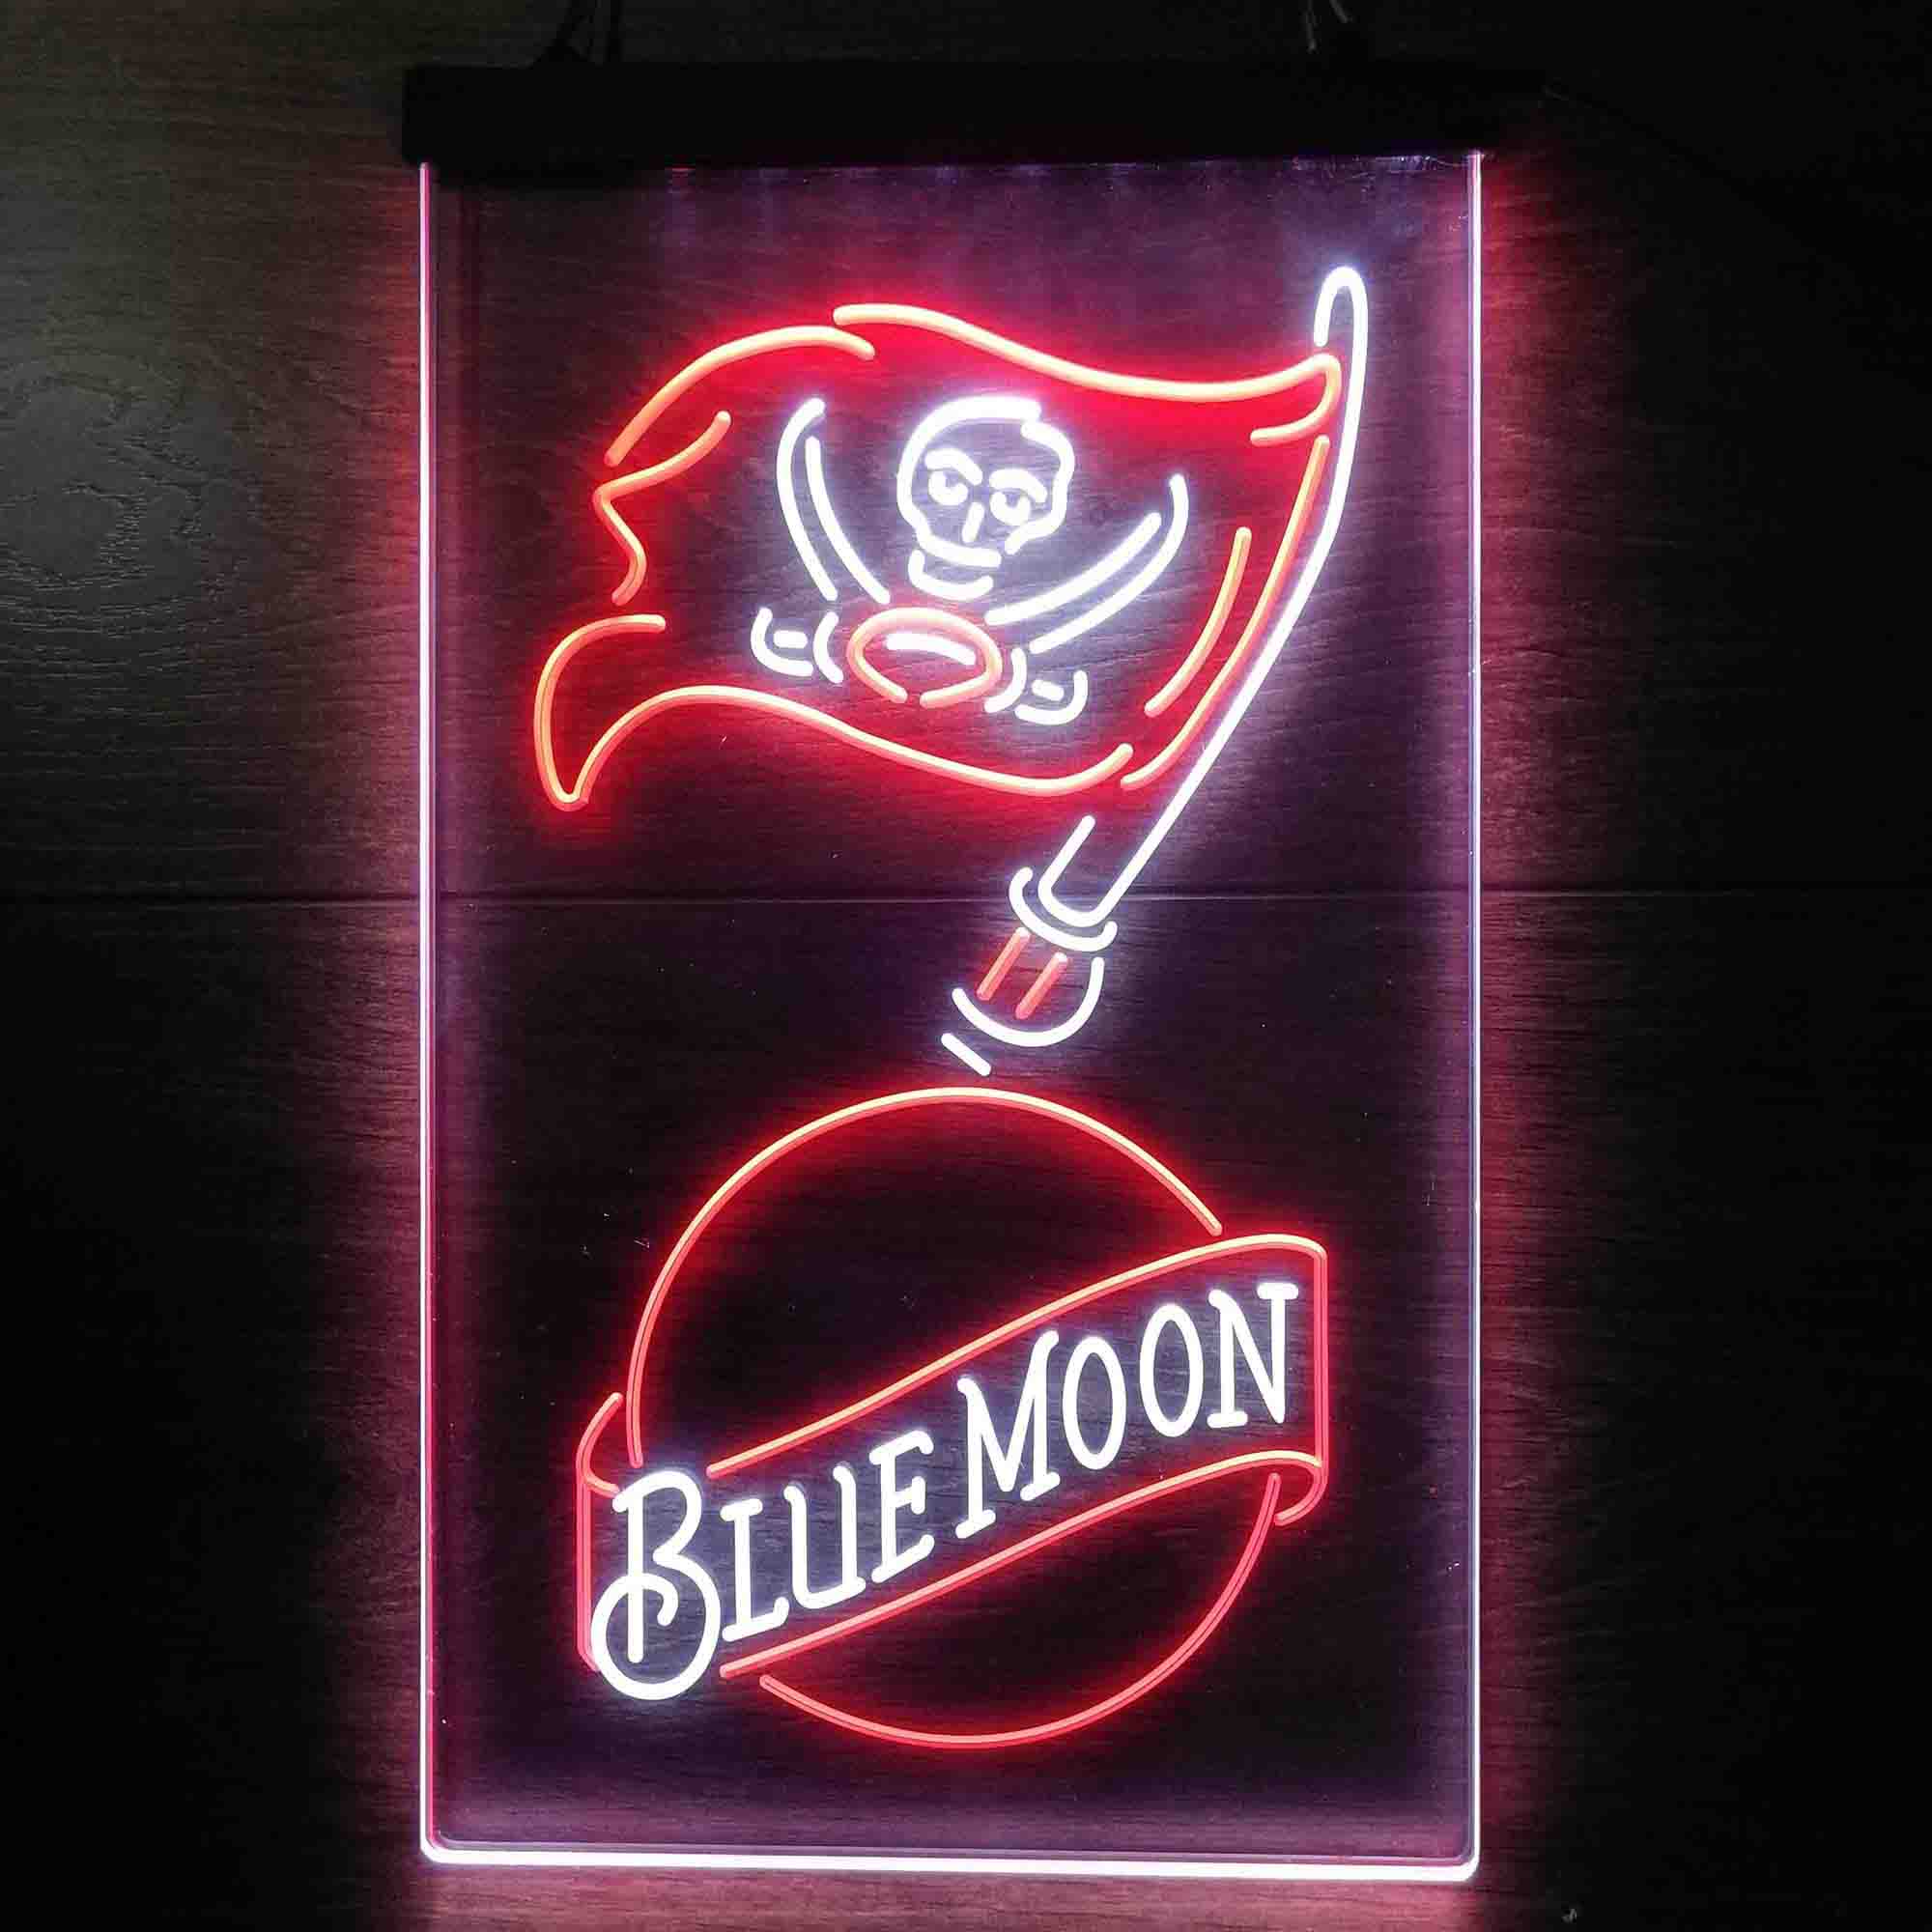 Blue Moon Bar Tampa Bay Buccaneers Est. 1976 LED Neon Sign